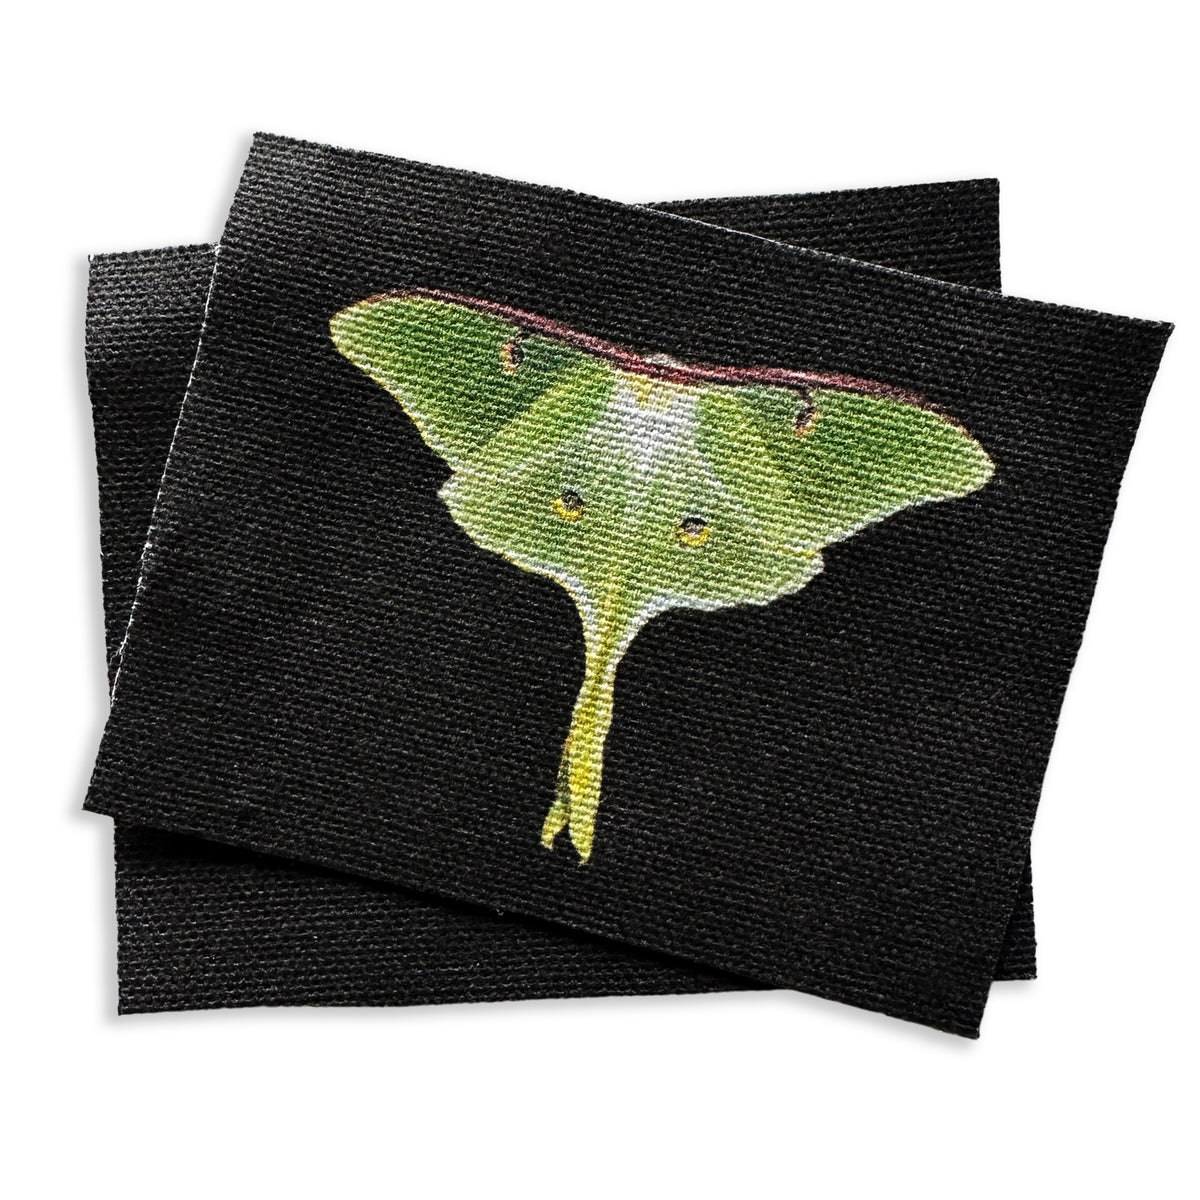 Luna Moth Sew-On Patch